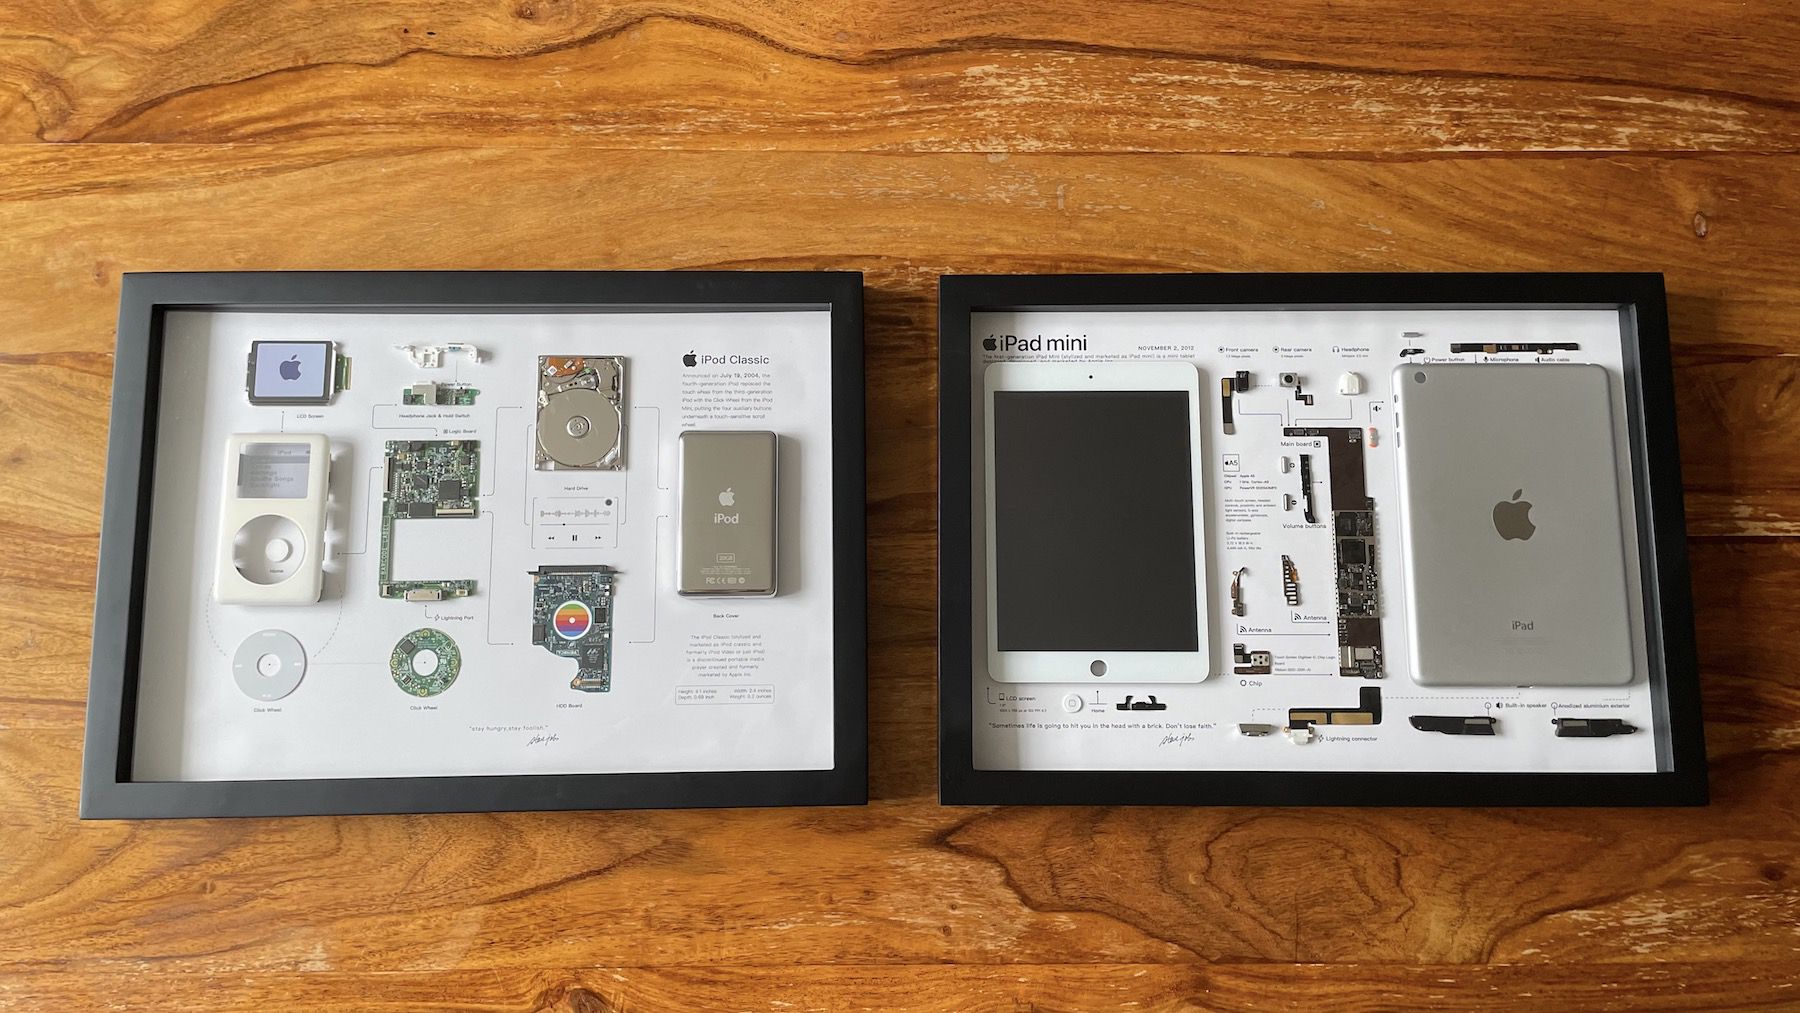 Review: GRID Studio iPod and iPad Mini Offer Nostalgic Apple Wall Art [Updated]